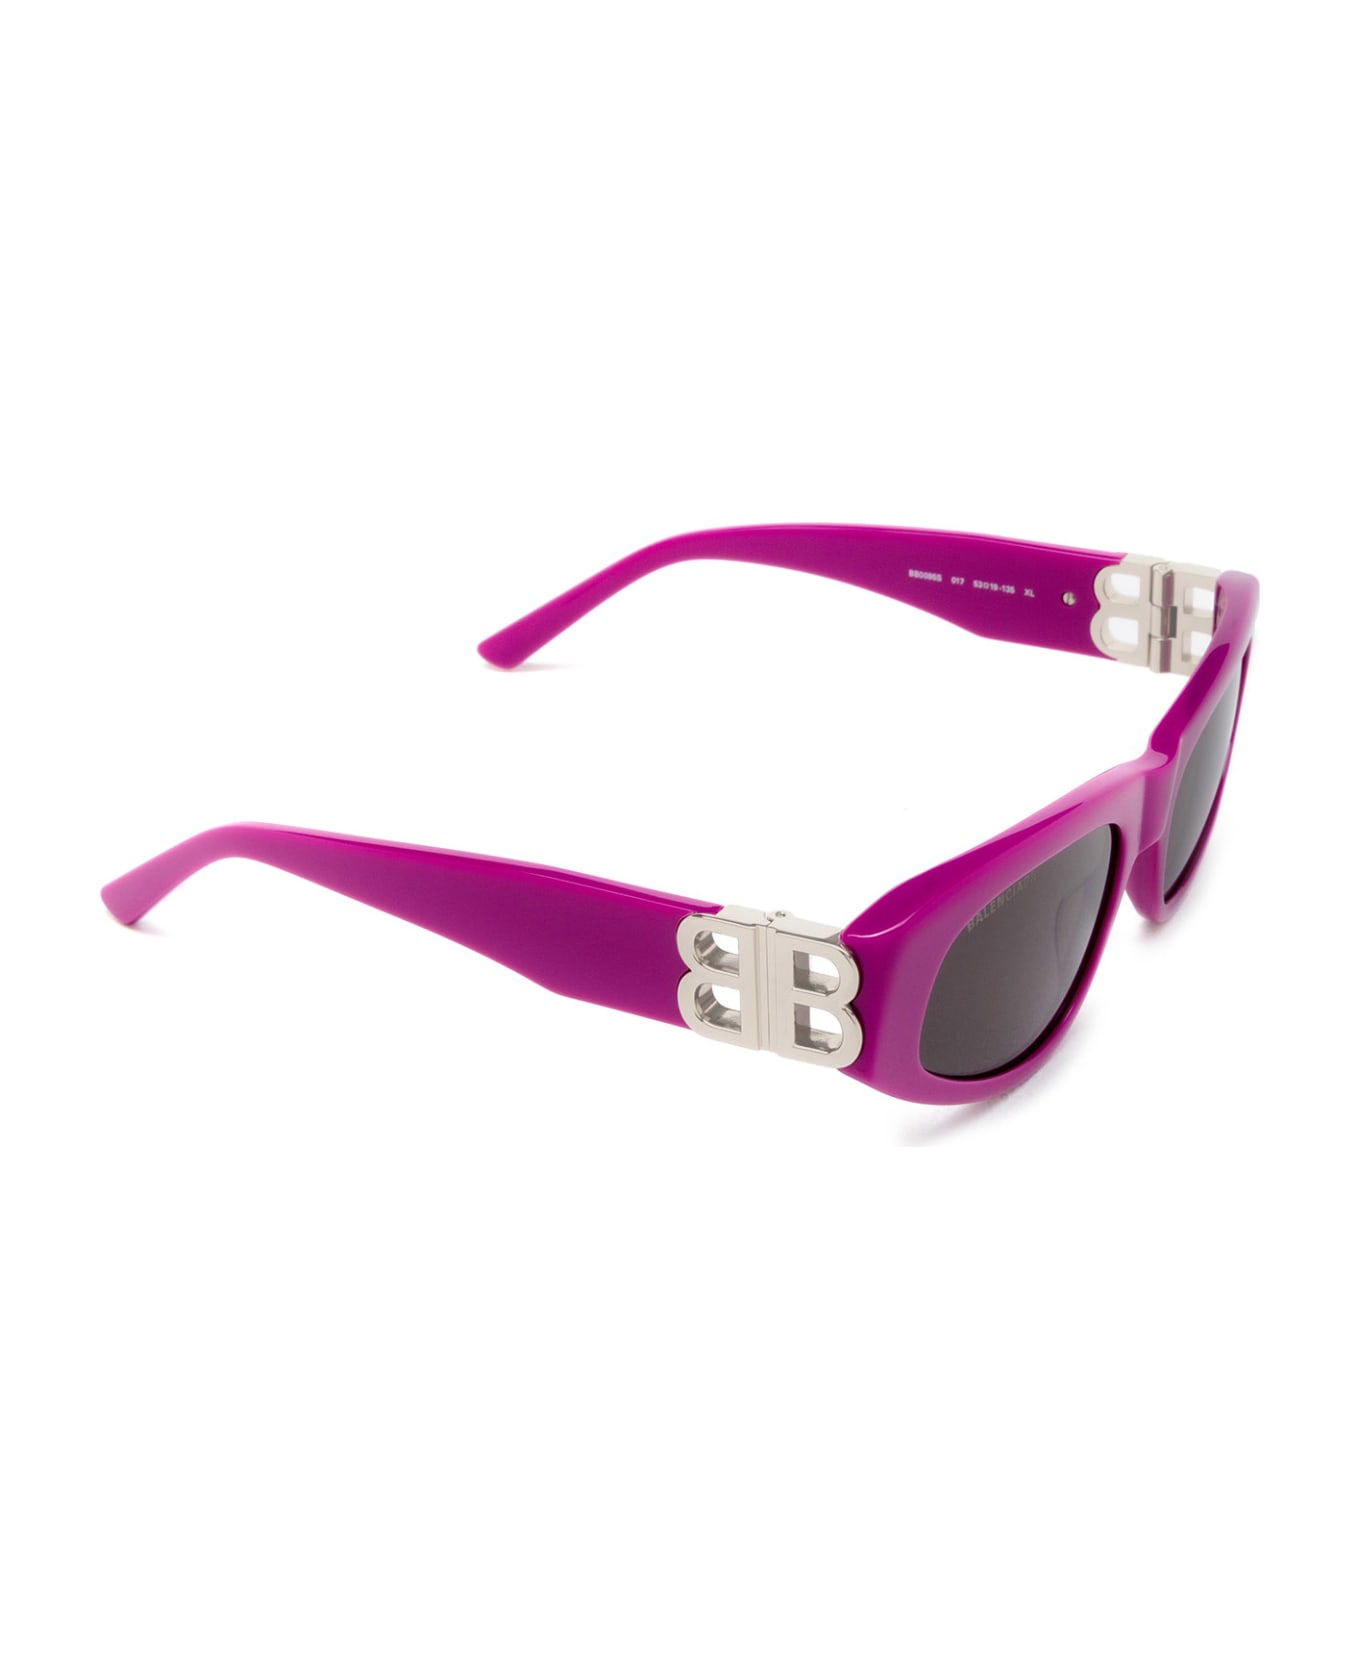 Balenciaga Eyewear Bb0095s Sunglasses - Fuchsia